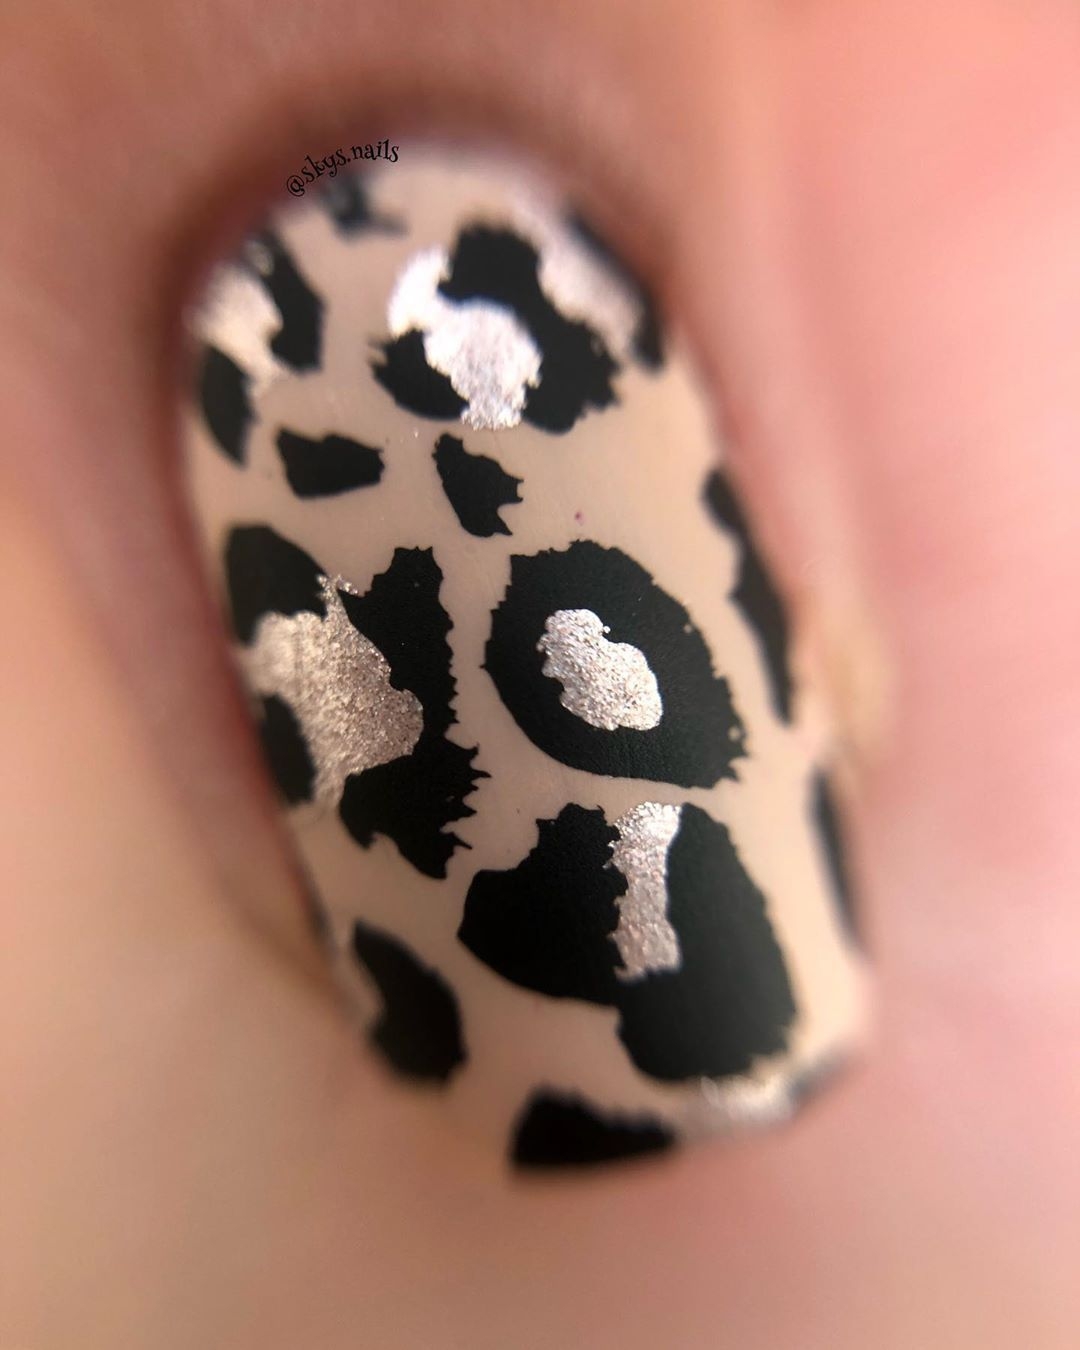 Дизайн леопард на ногтях. Ногти с леопардовым принтом. Леопардовые пятна на ногтях. Саиоюр с оеопардовым приниом. Маникюр с леопардовым ногтем.